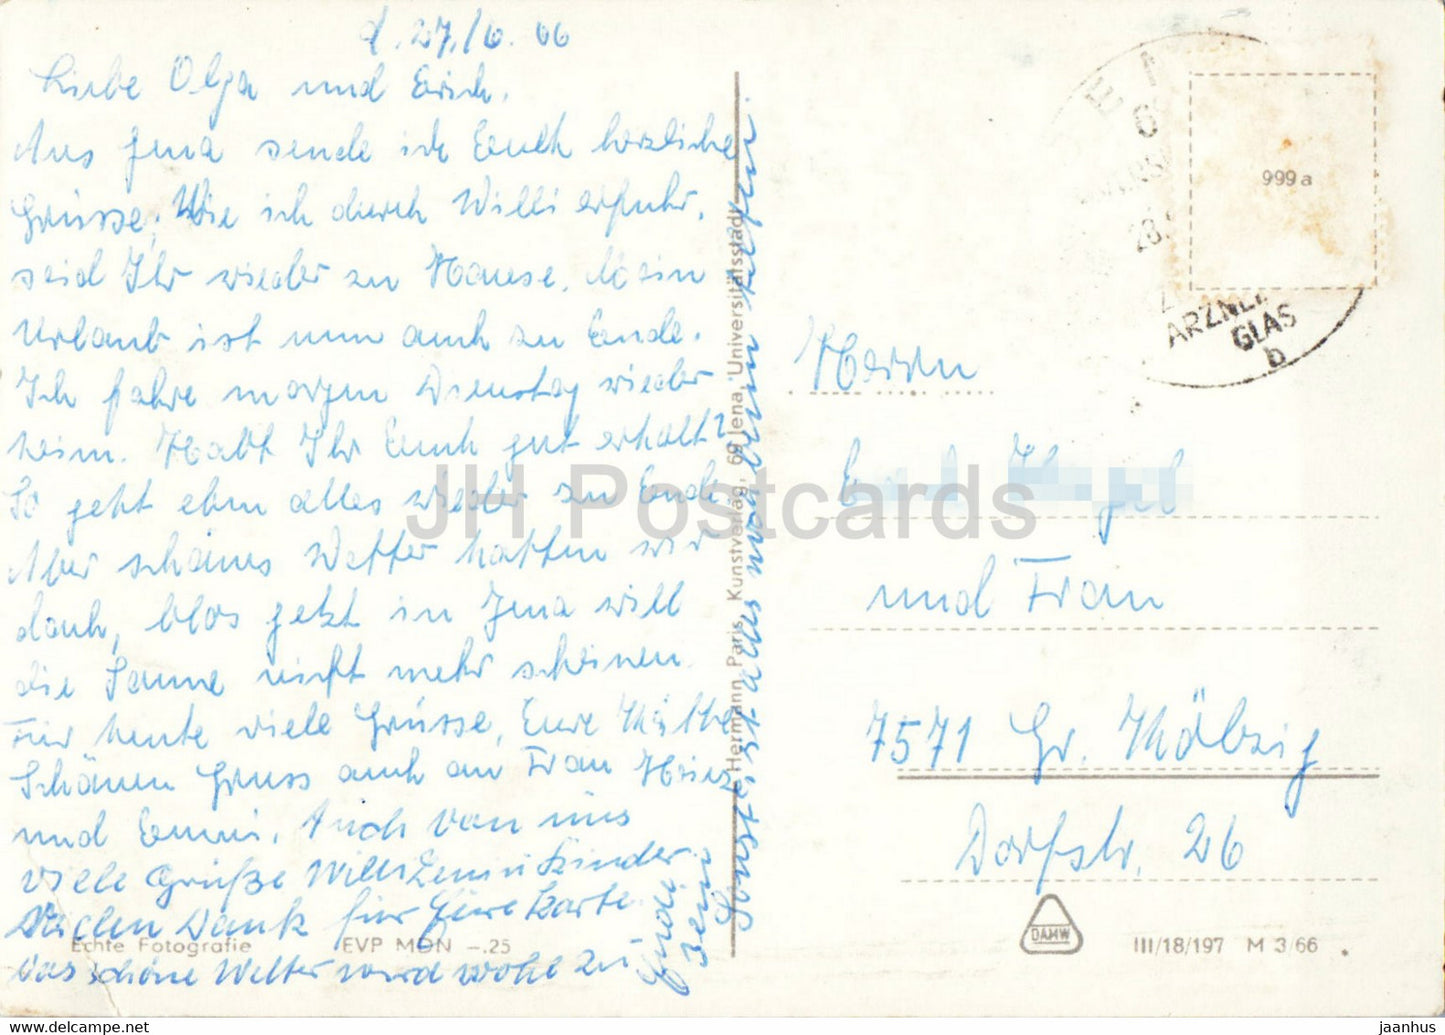 Jena - Blick vom Hotel International - Zeiss Planetariom - Universitat - tram - old postcard - 1966 - Germany DDR - used